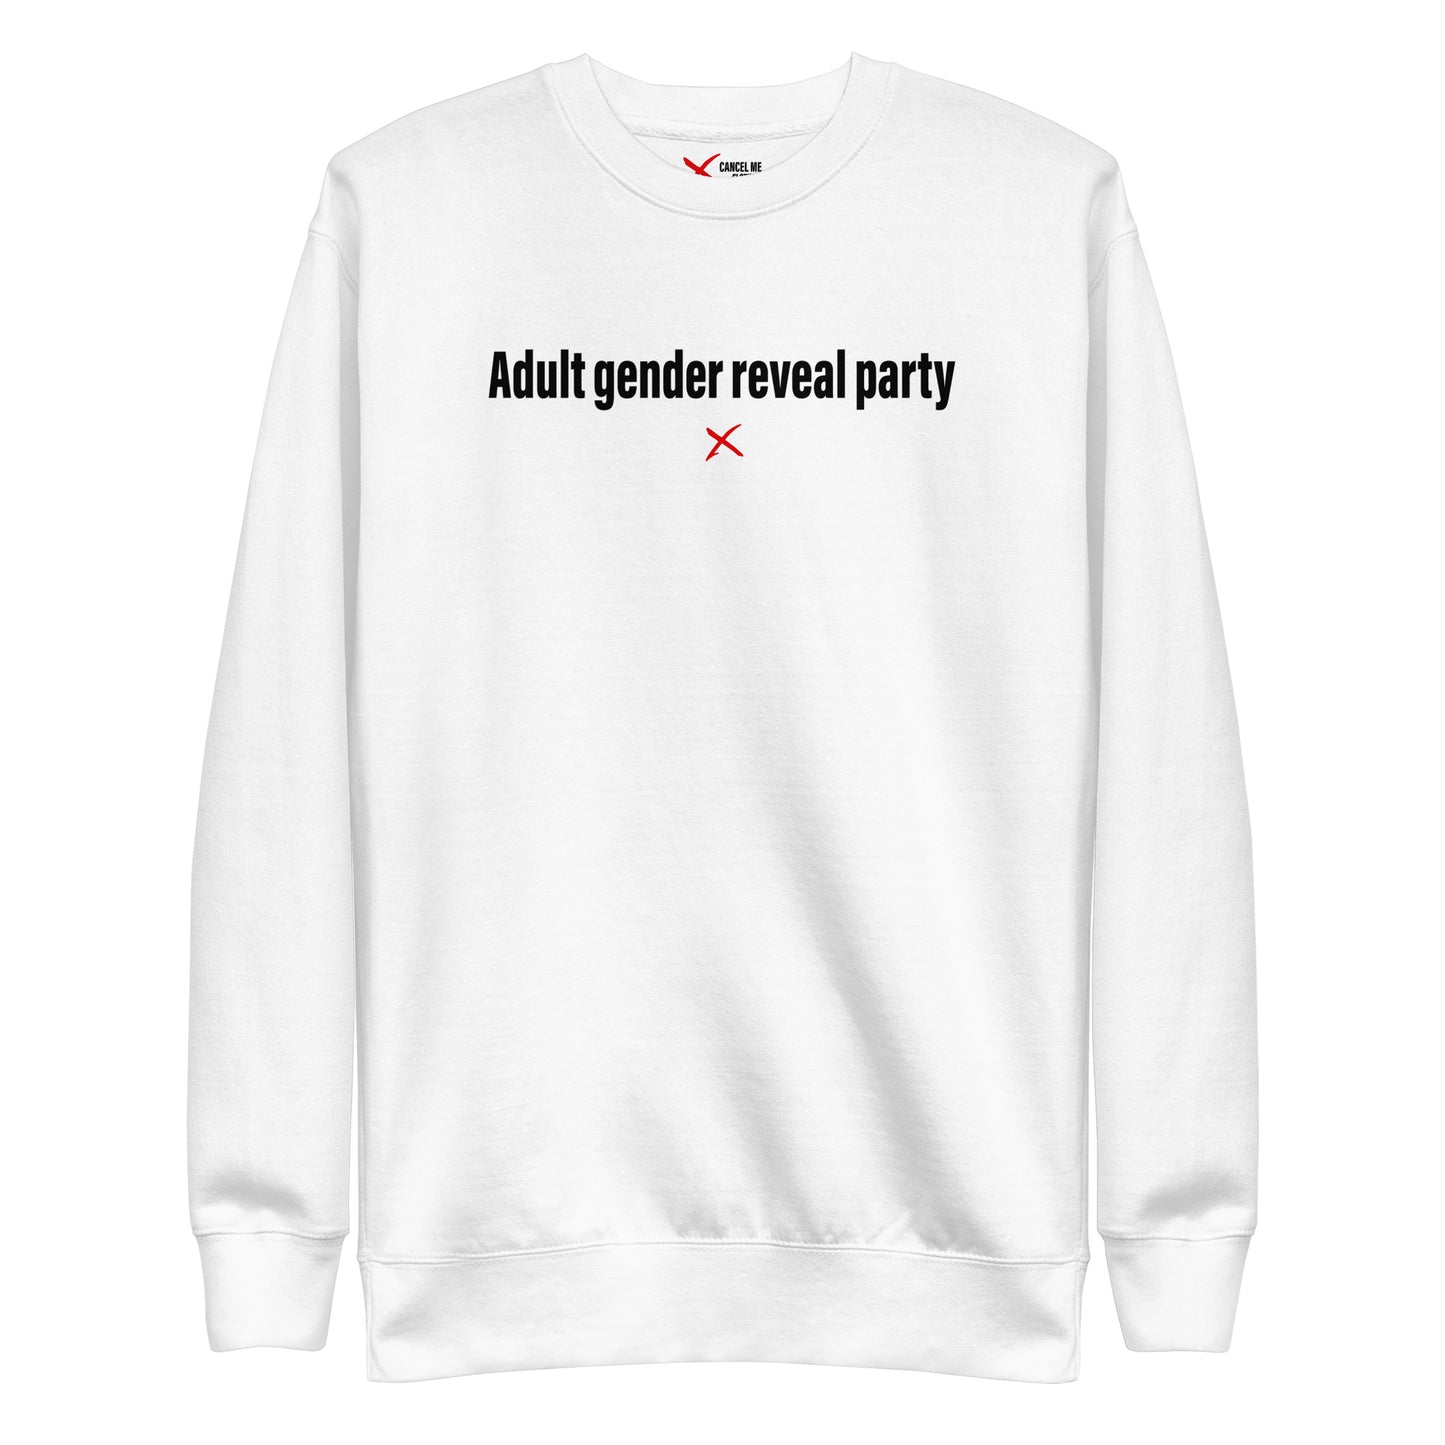 Adult gender reveal party - Sweatshirt